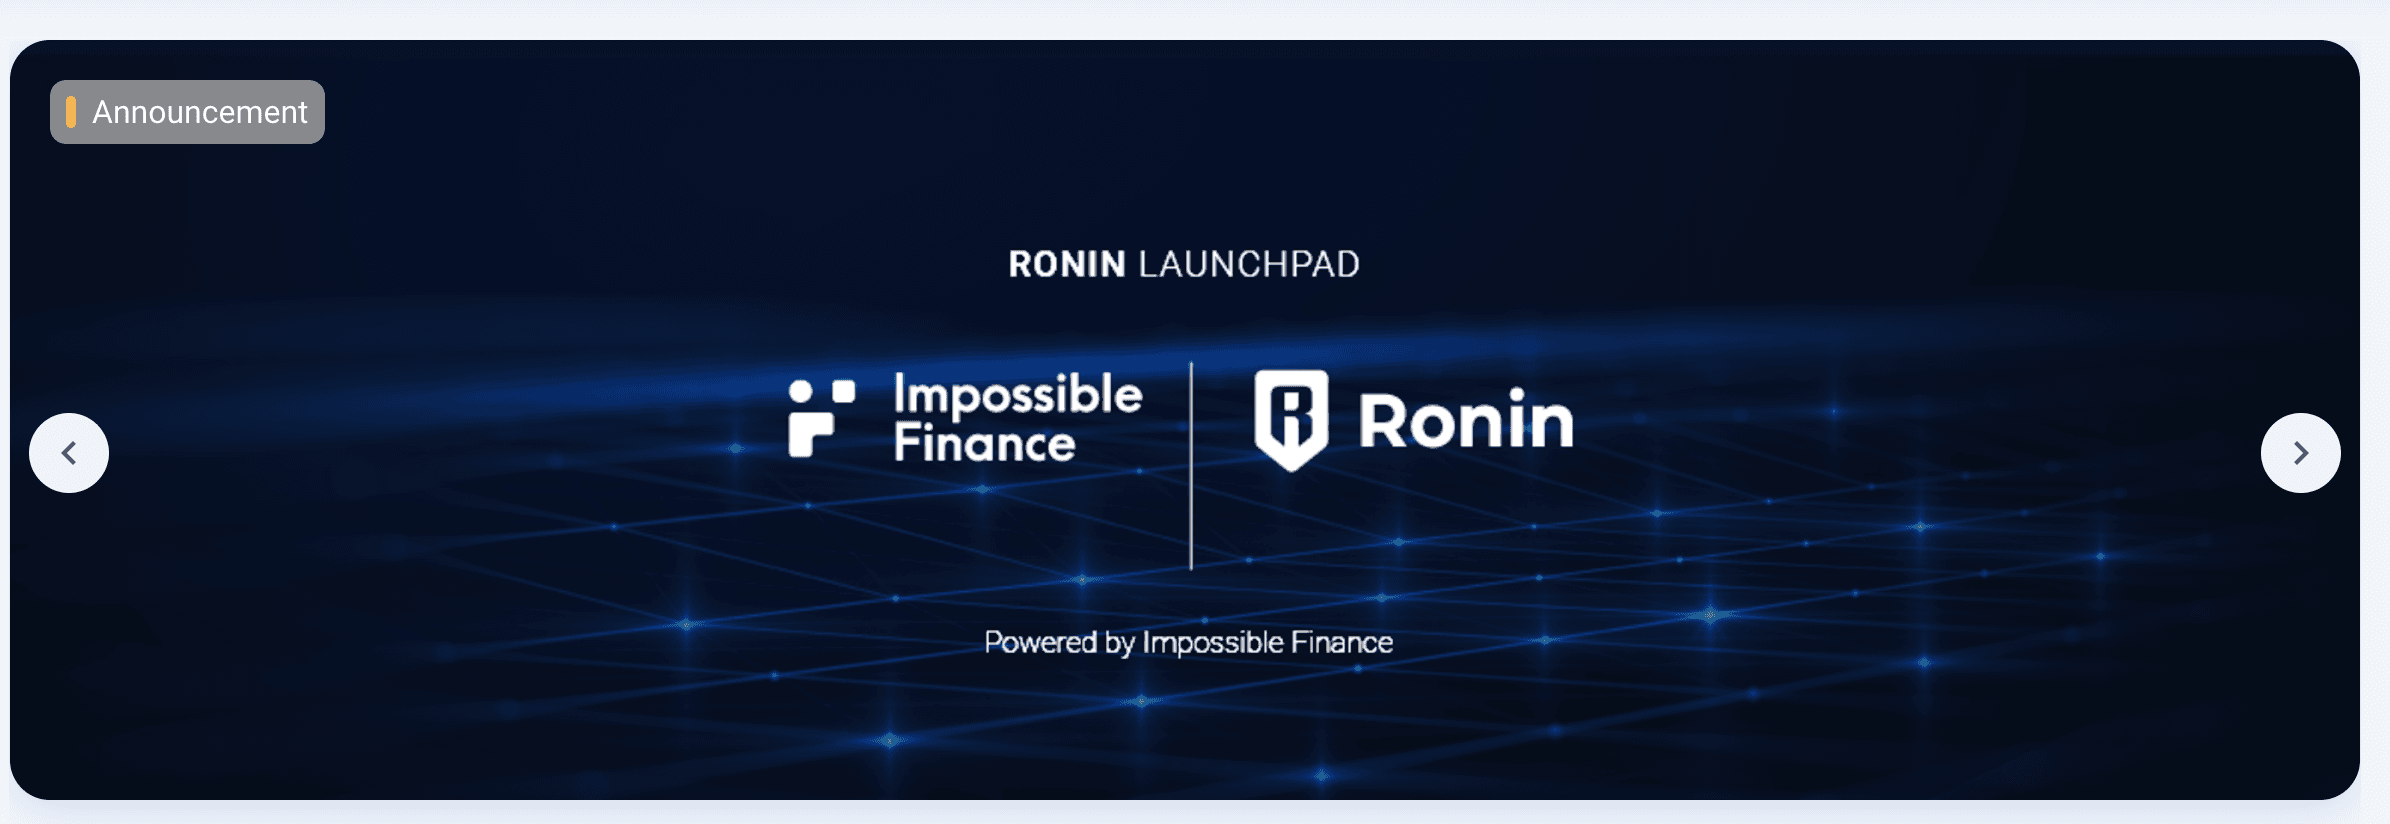 Ronin Launchpad